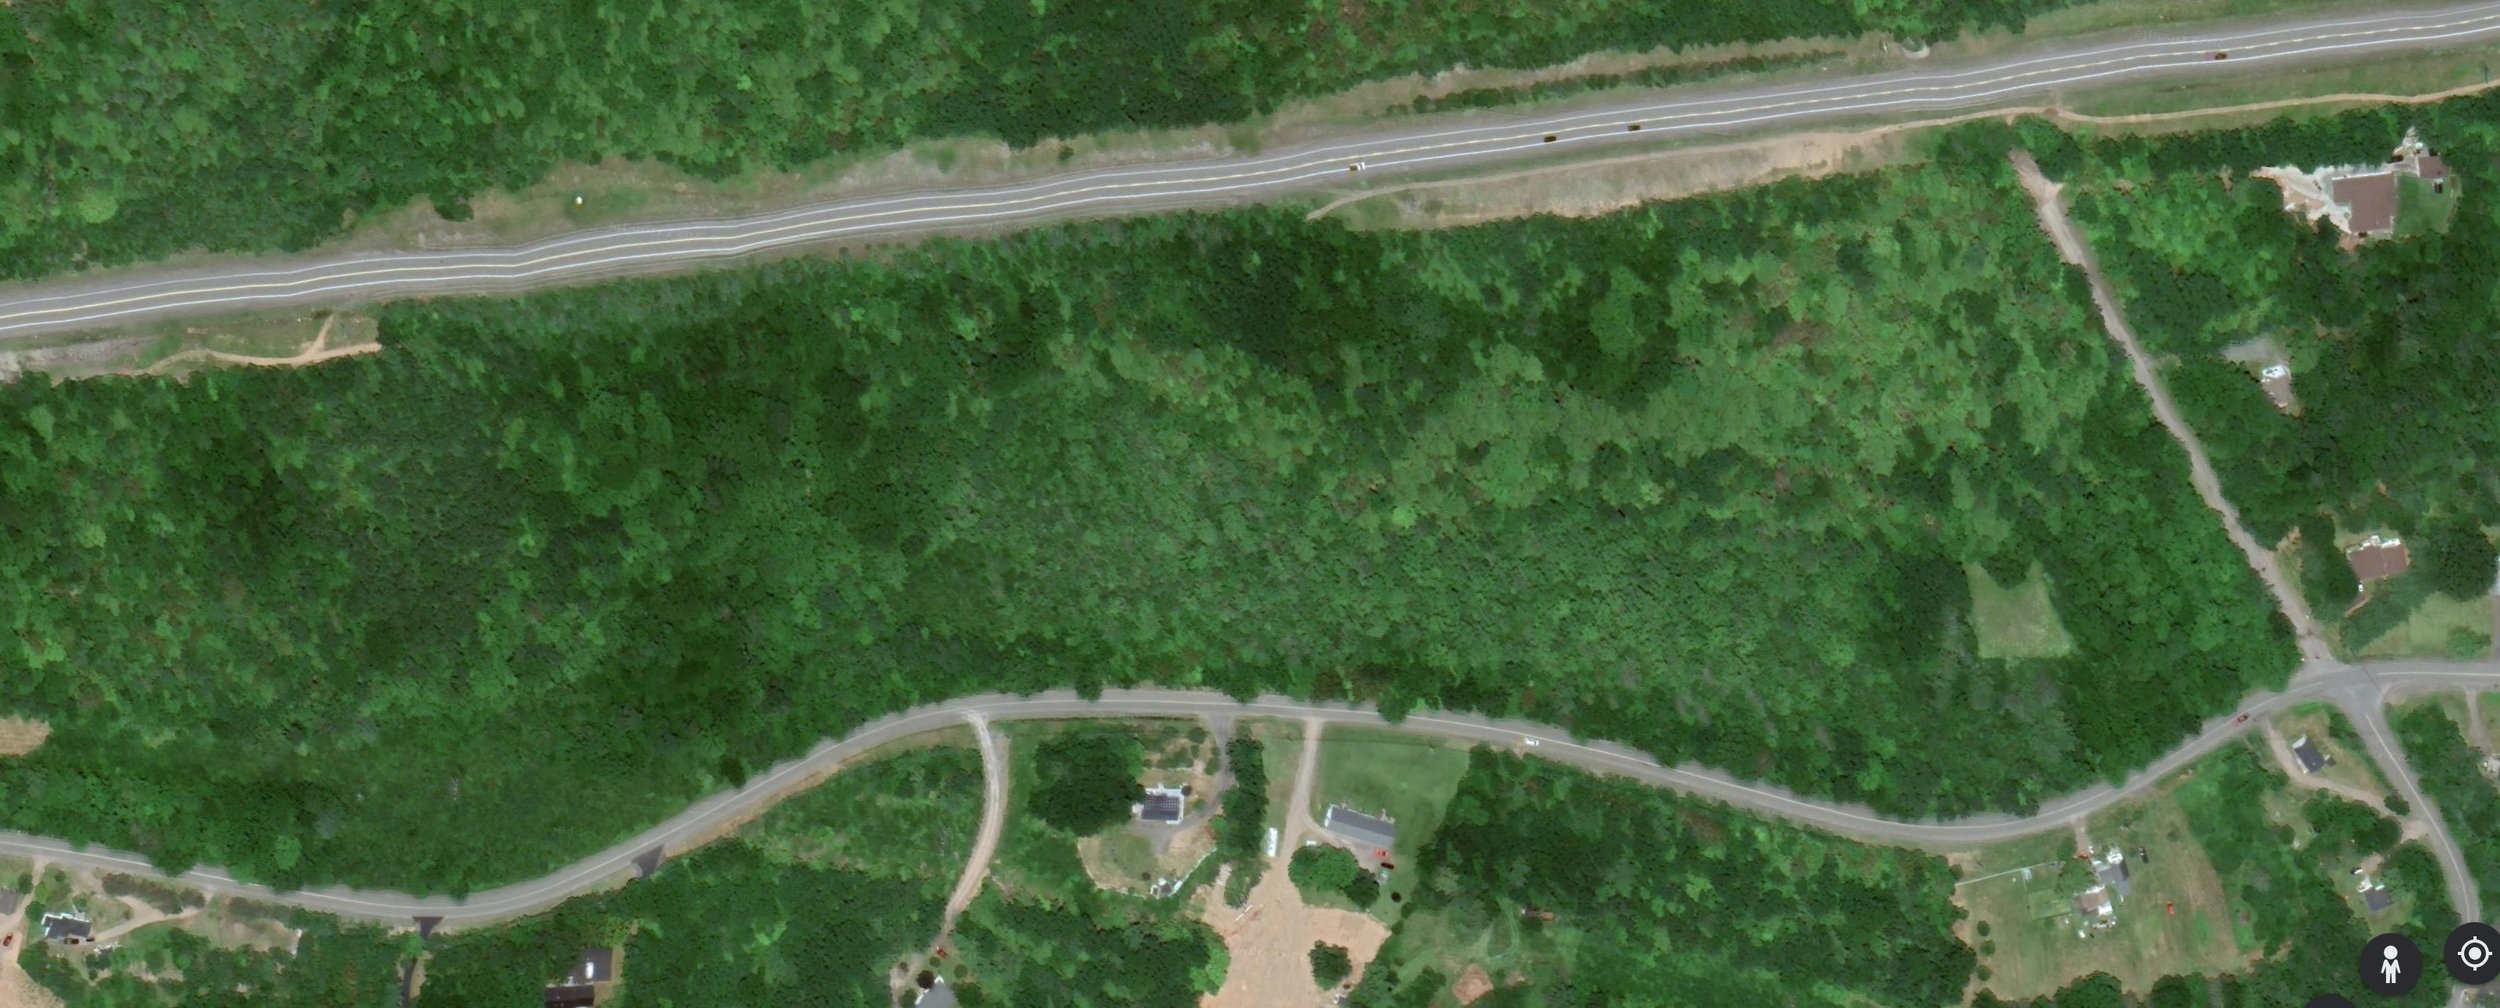 Google Earth View.jpg